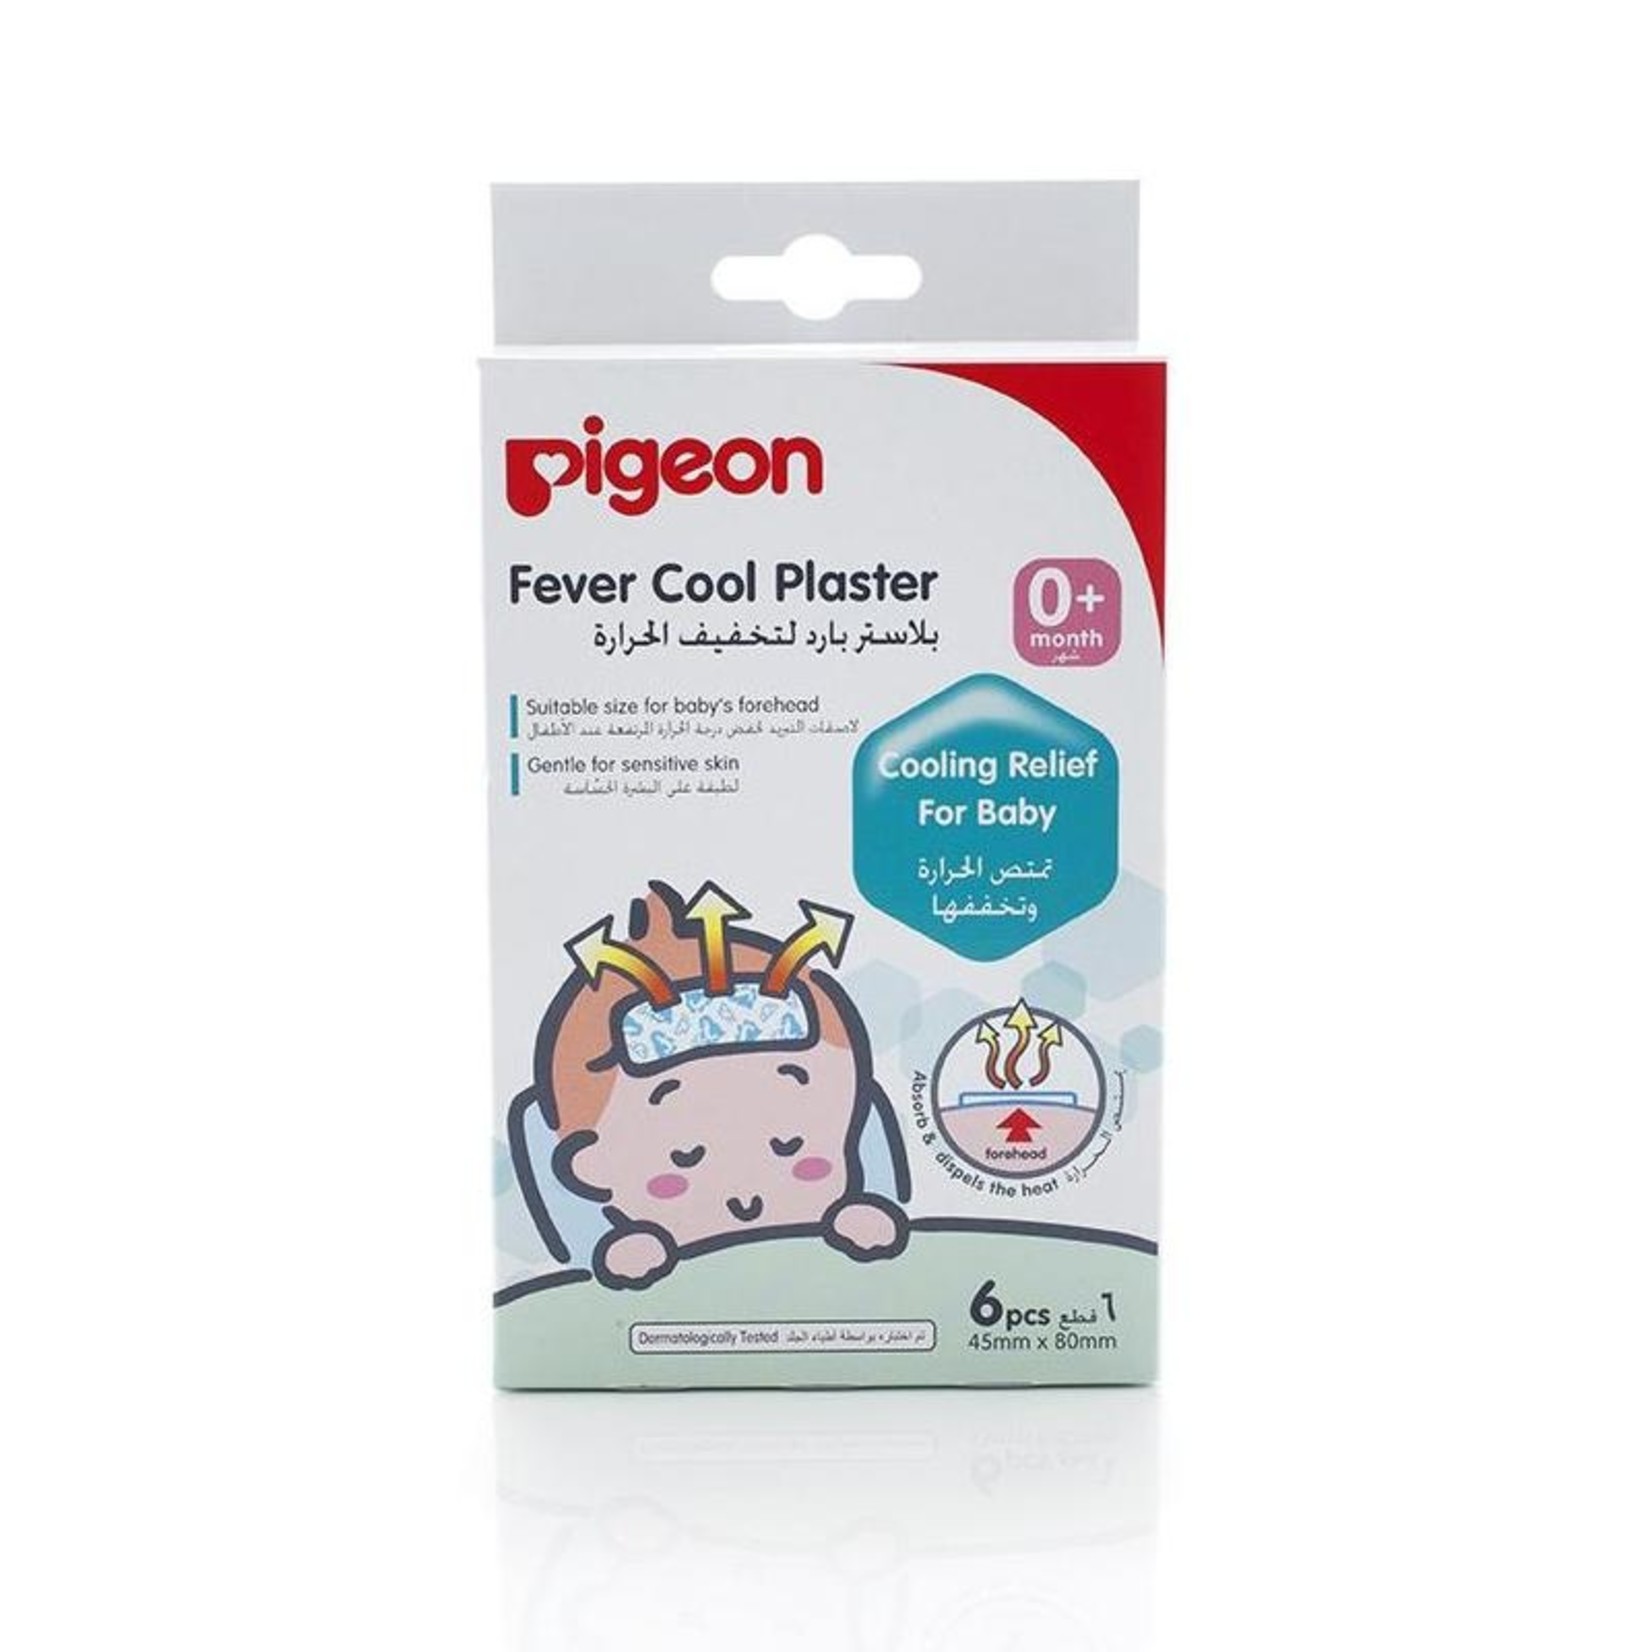 Pigeon Fever Cool Plaster